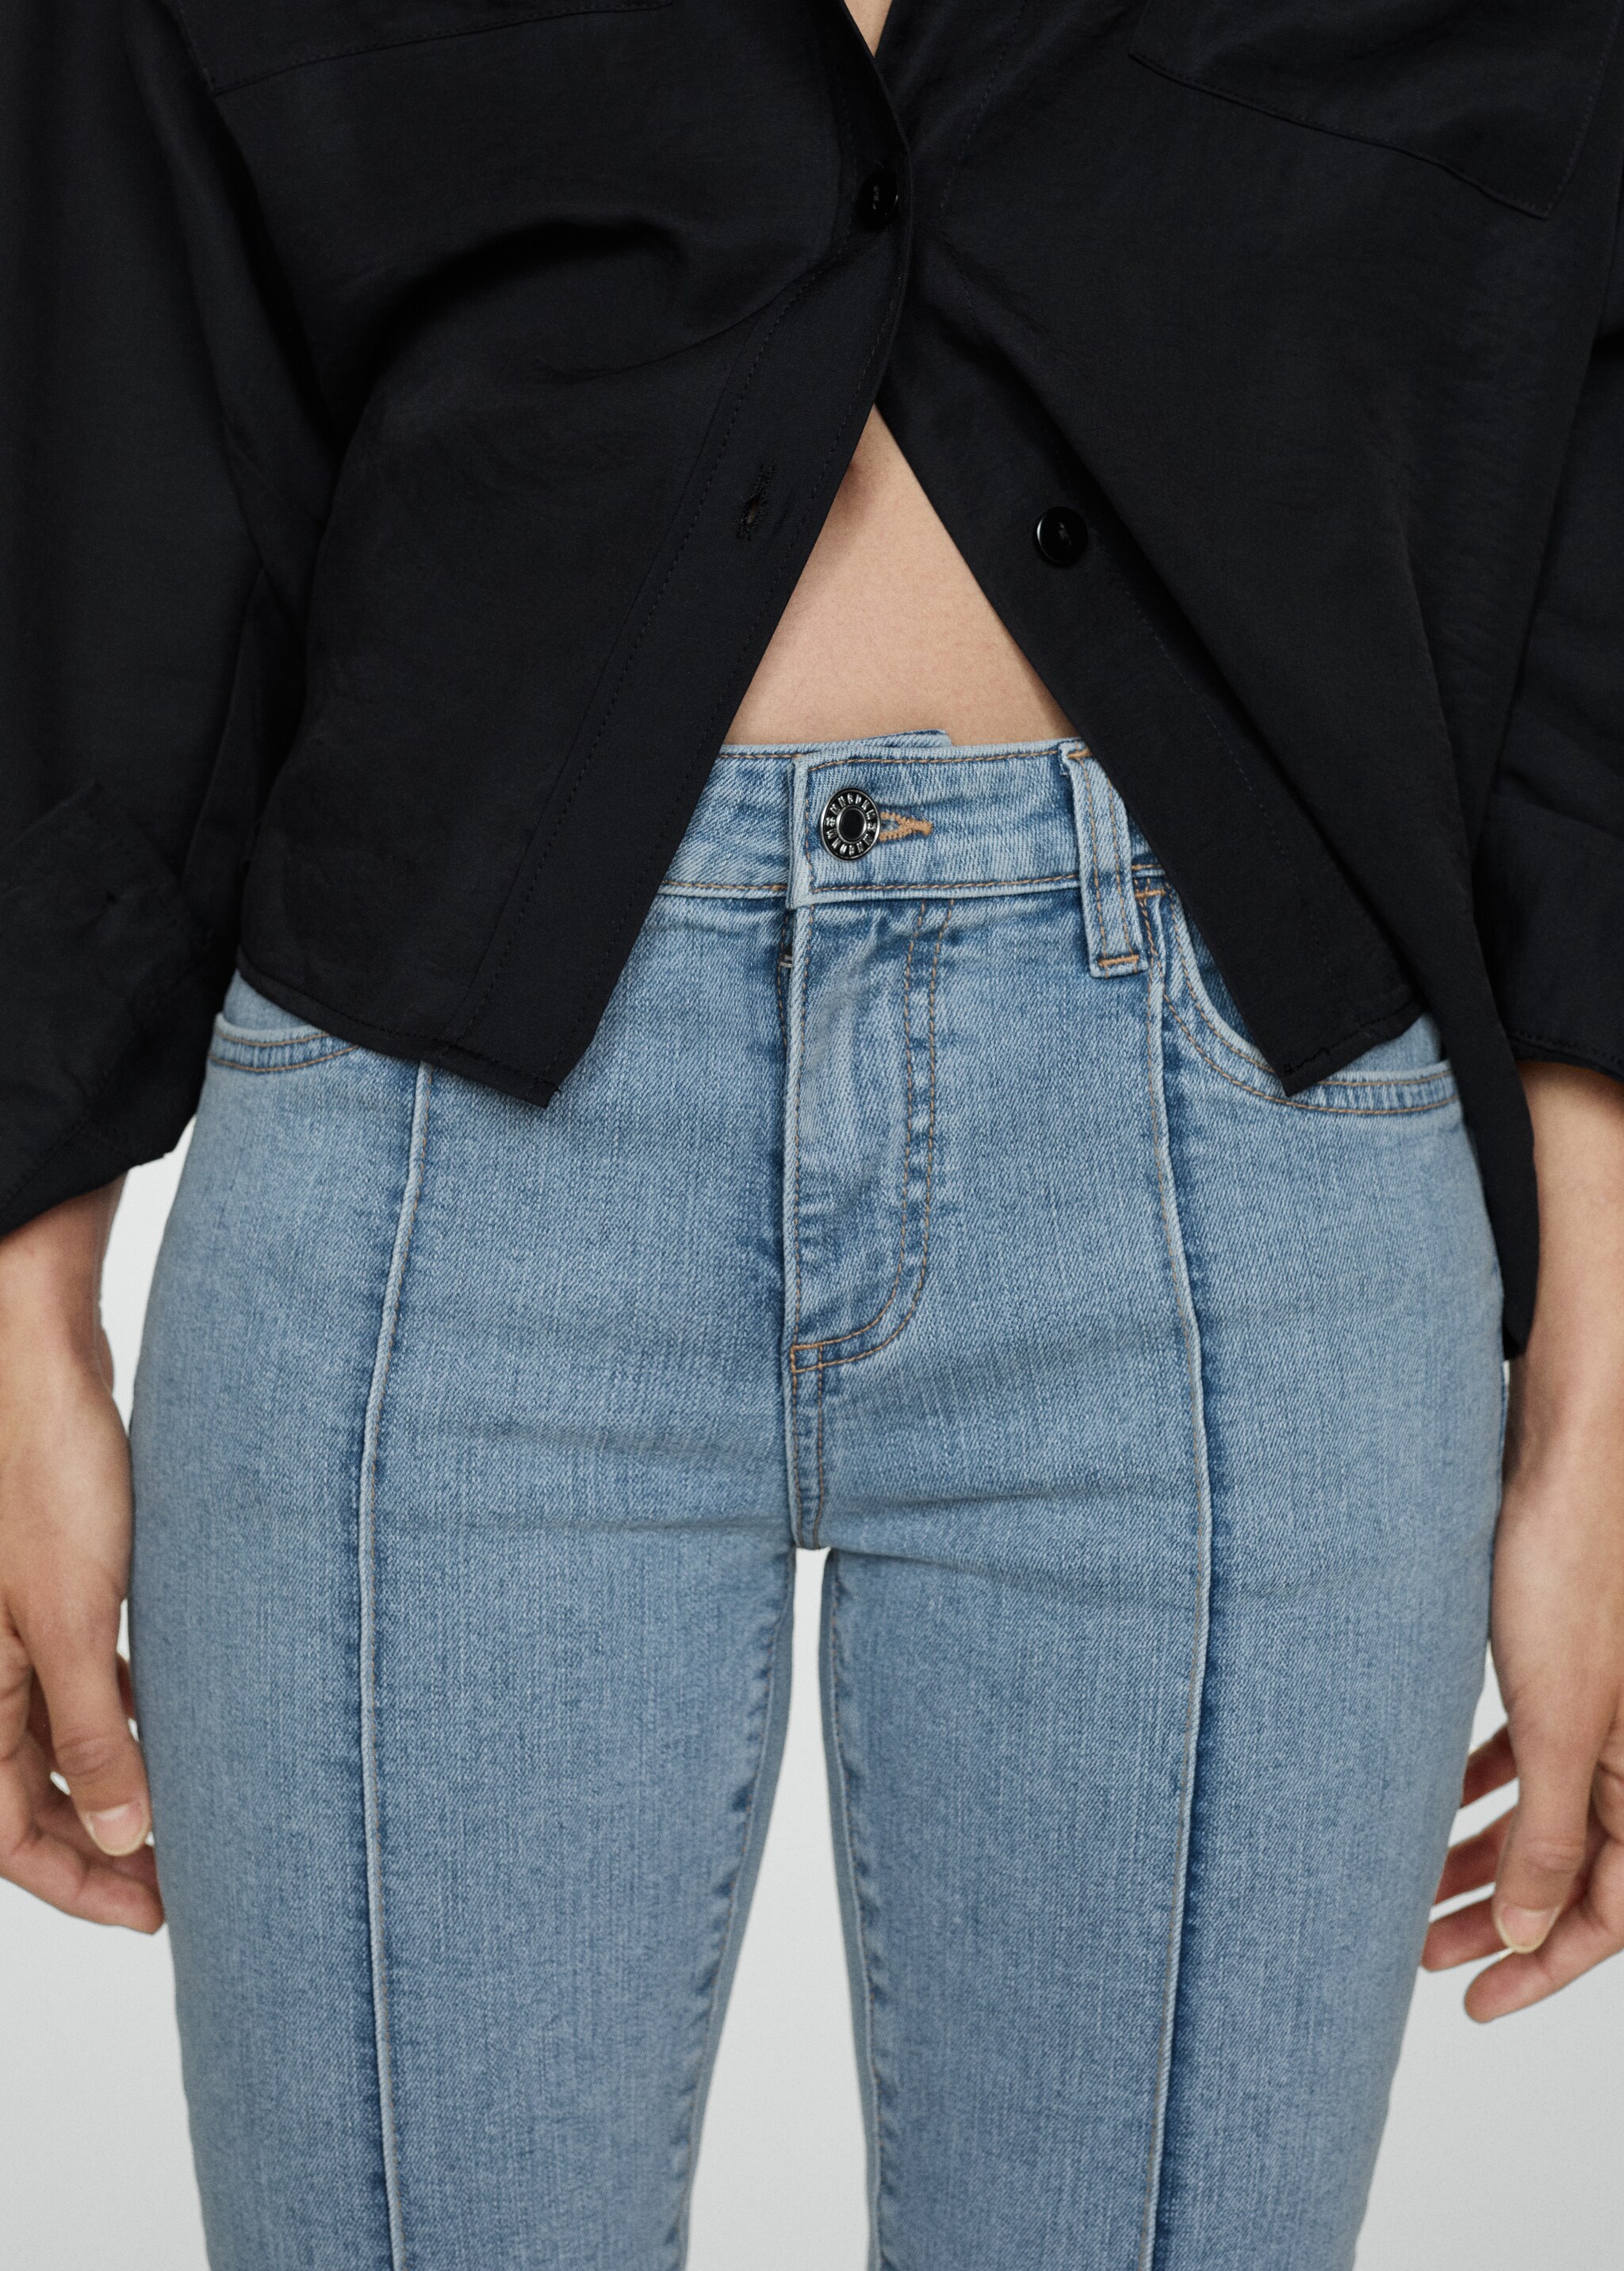 Slim capri jeans with decorative stitching - Деталь изделия 6